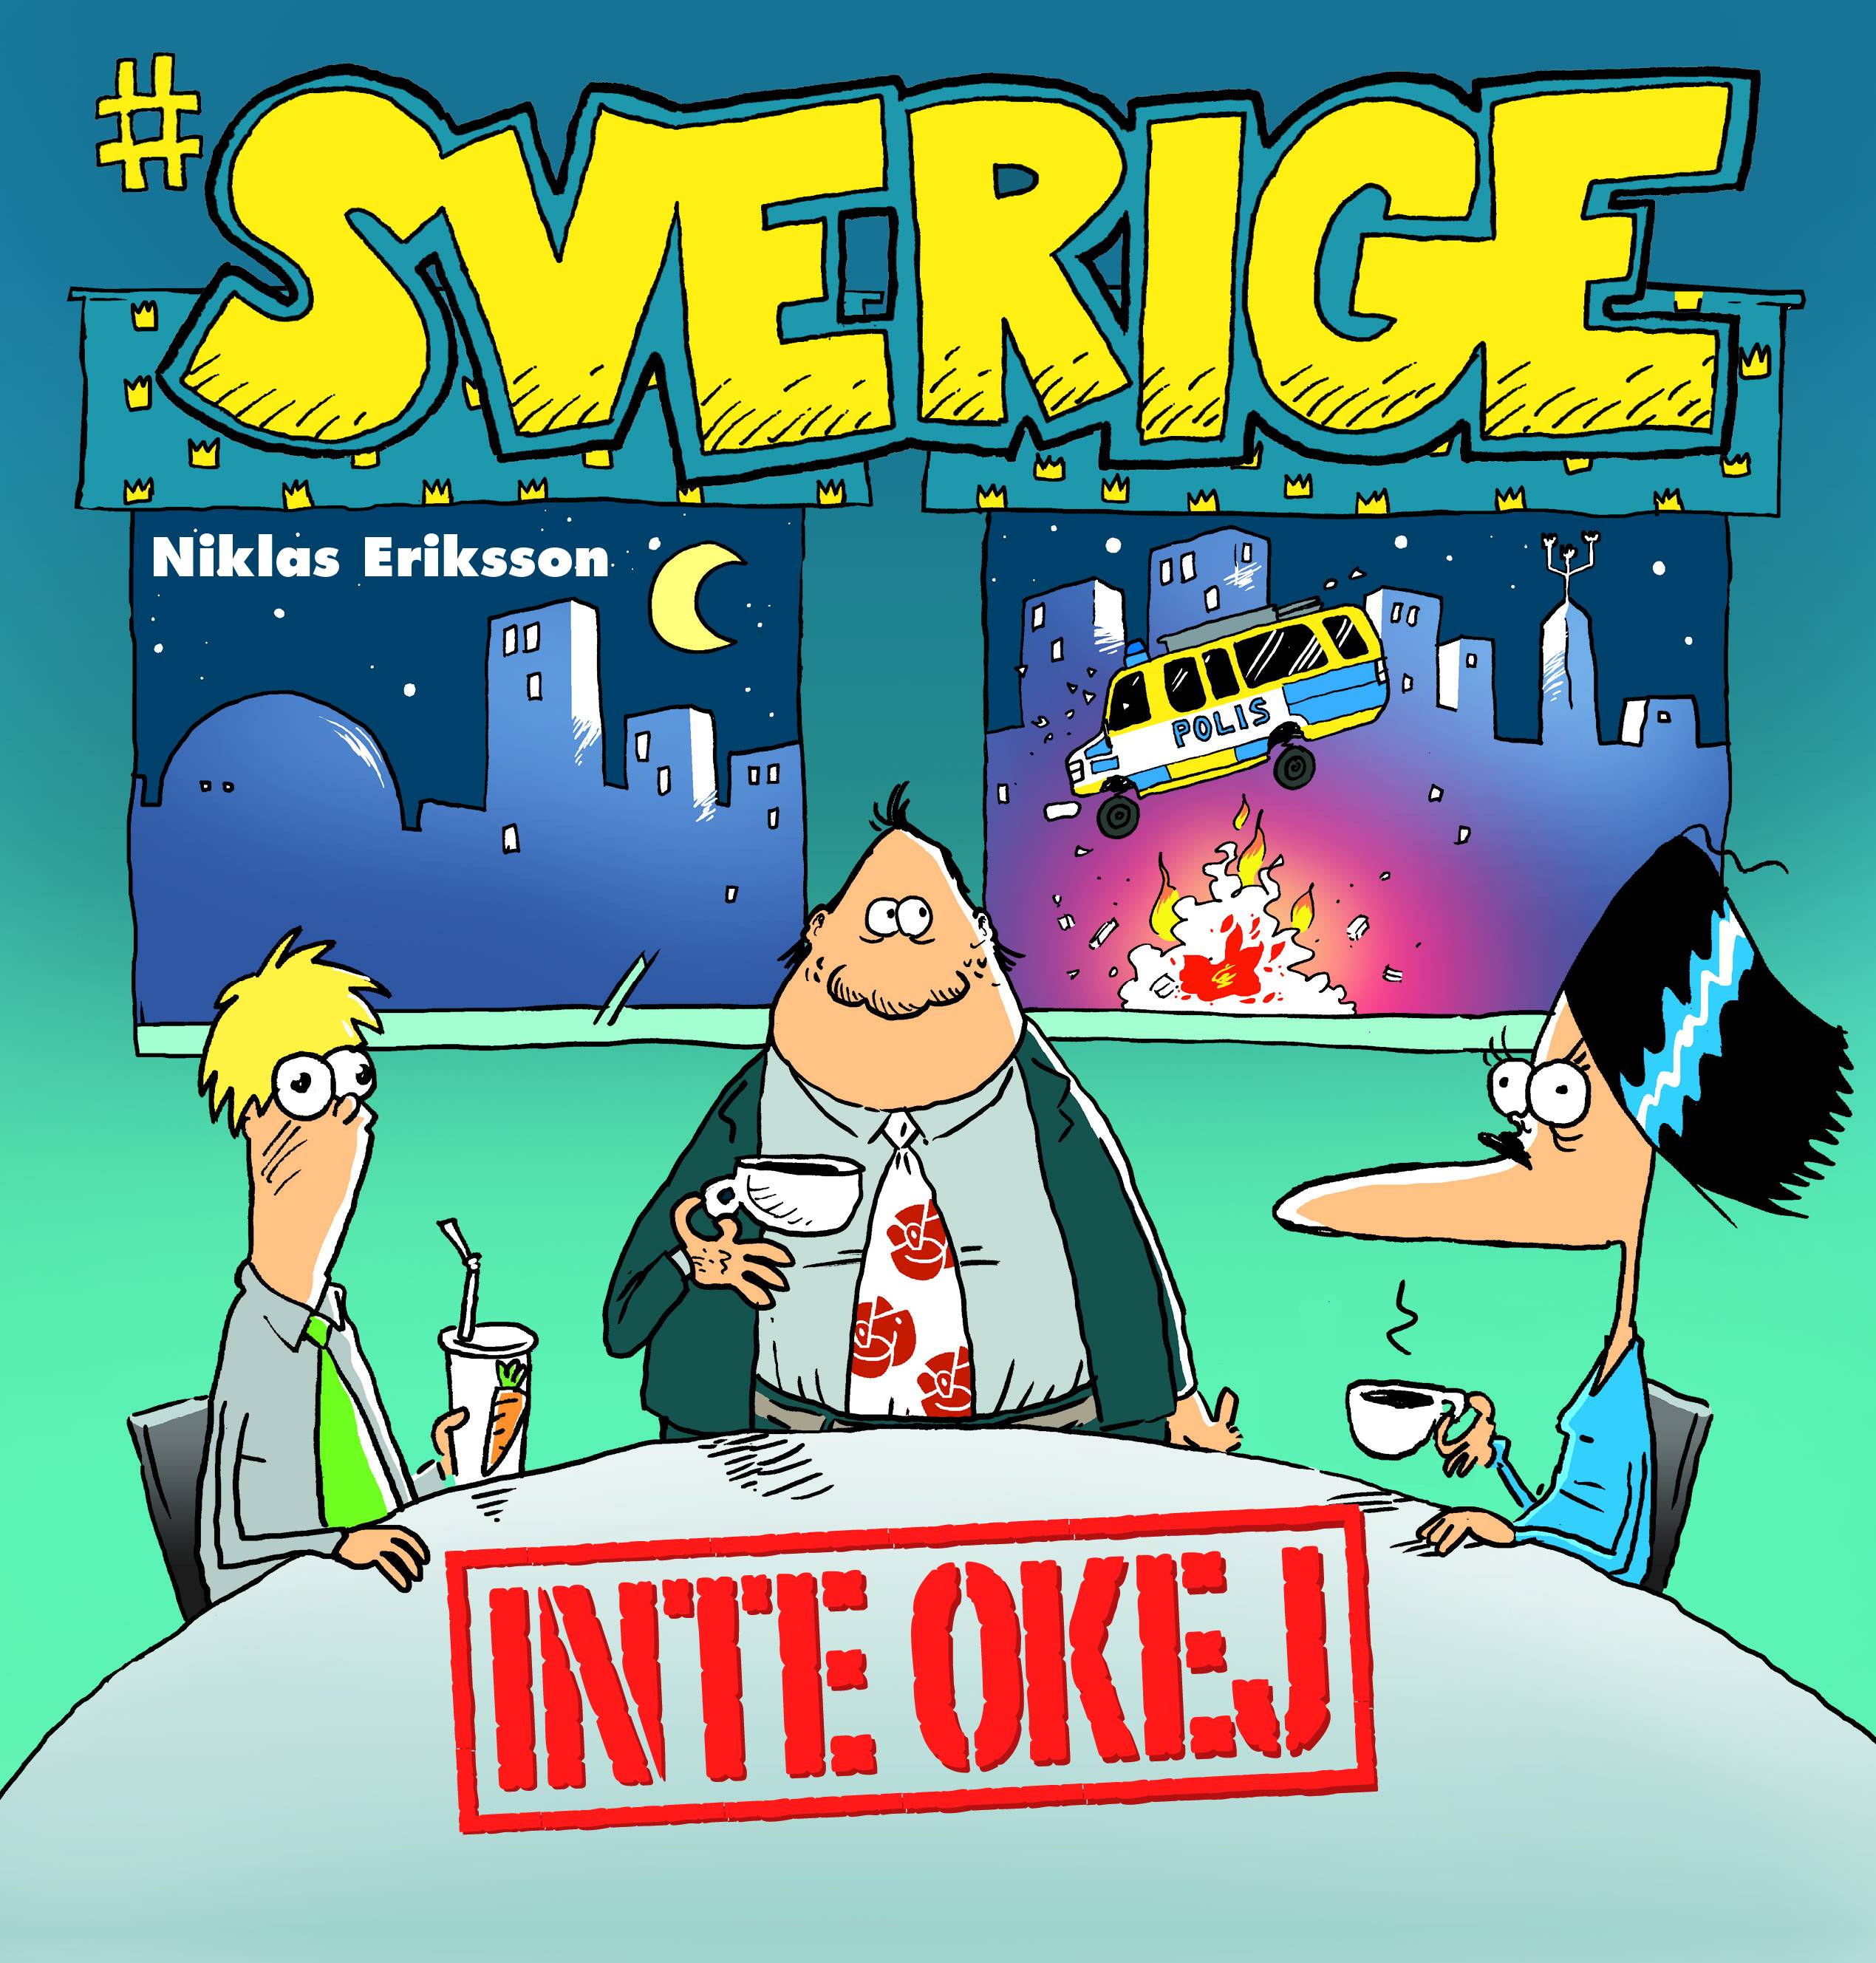 #Sverige. Inte okej